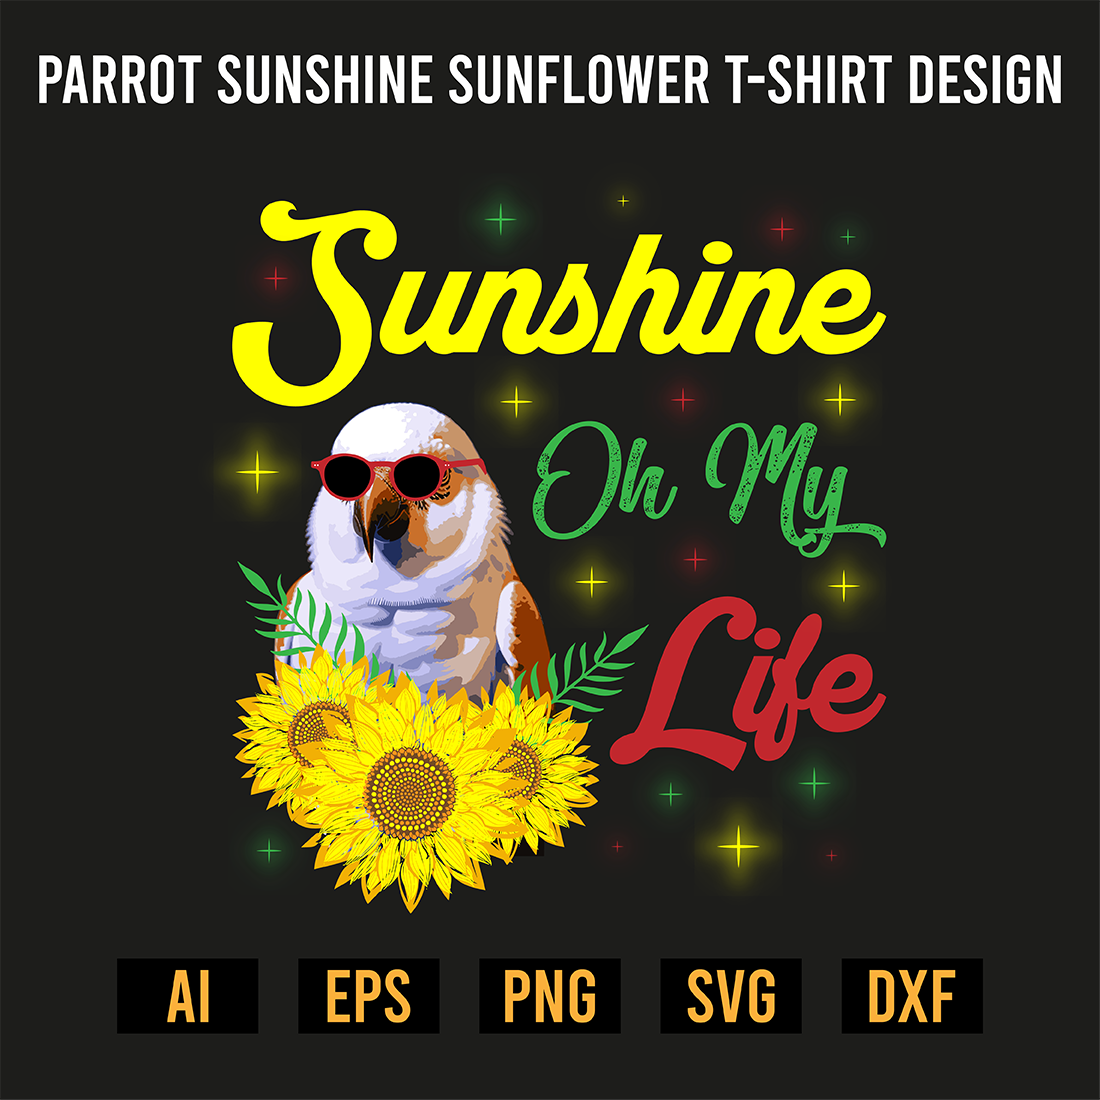 Parrot Sunshine Sunflower T-Shirt Design preview image.